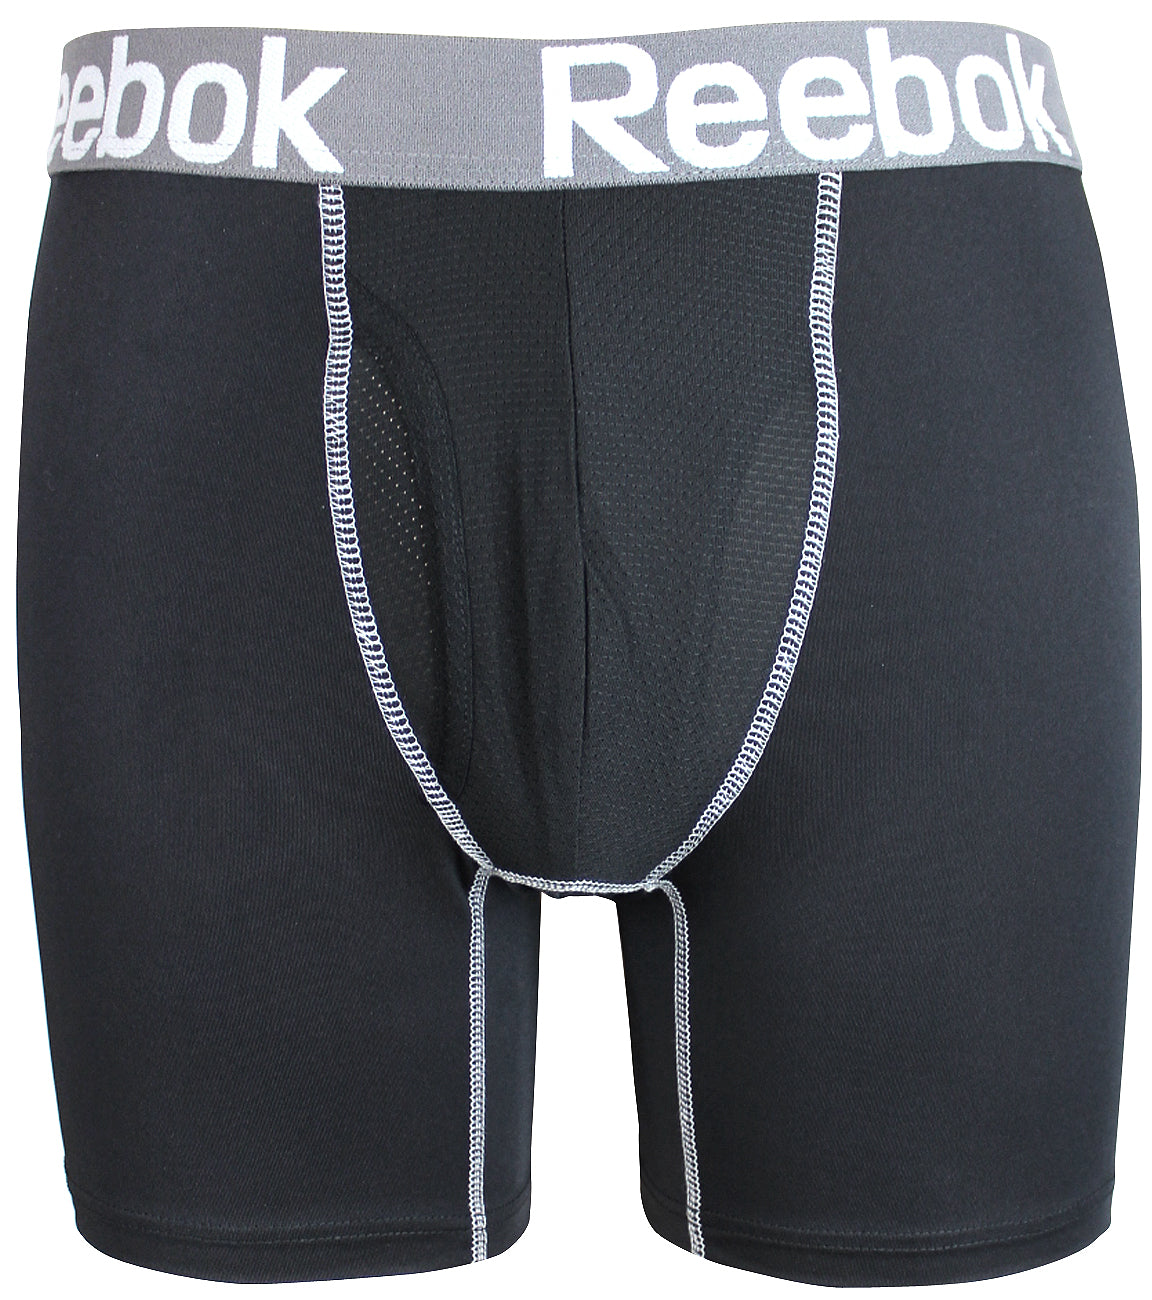 Reebok Mens Performance Training Boxer Briefs Black Grey size MEDIUM